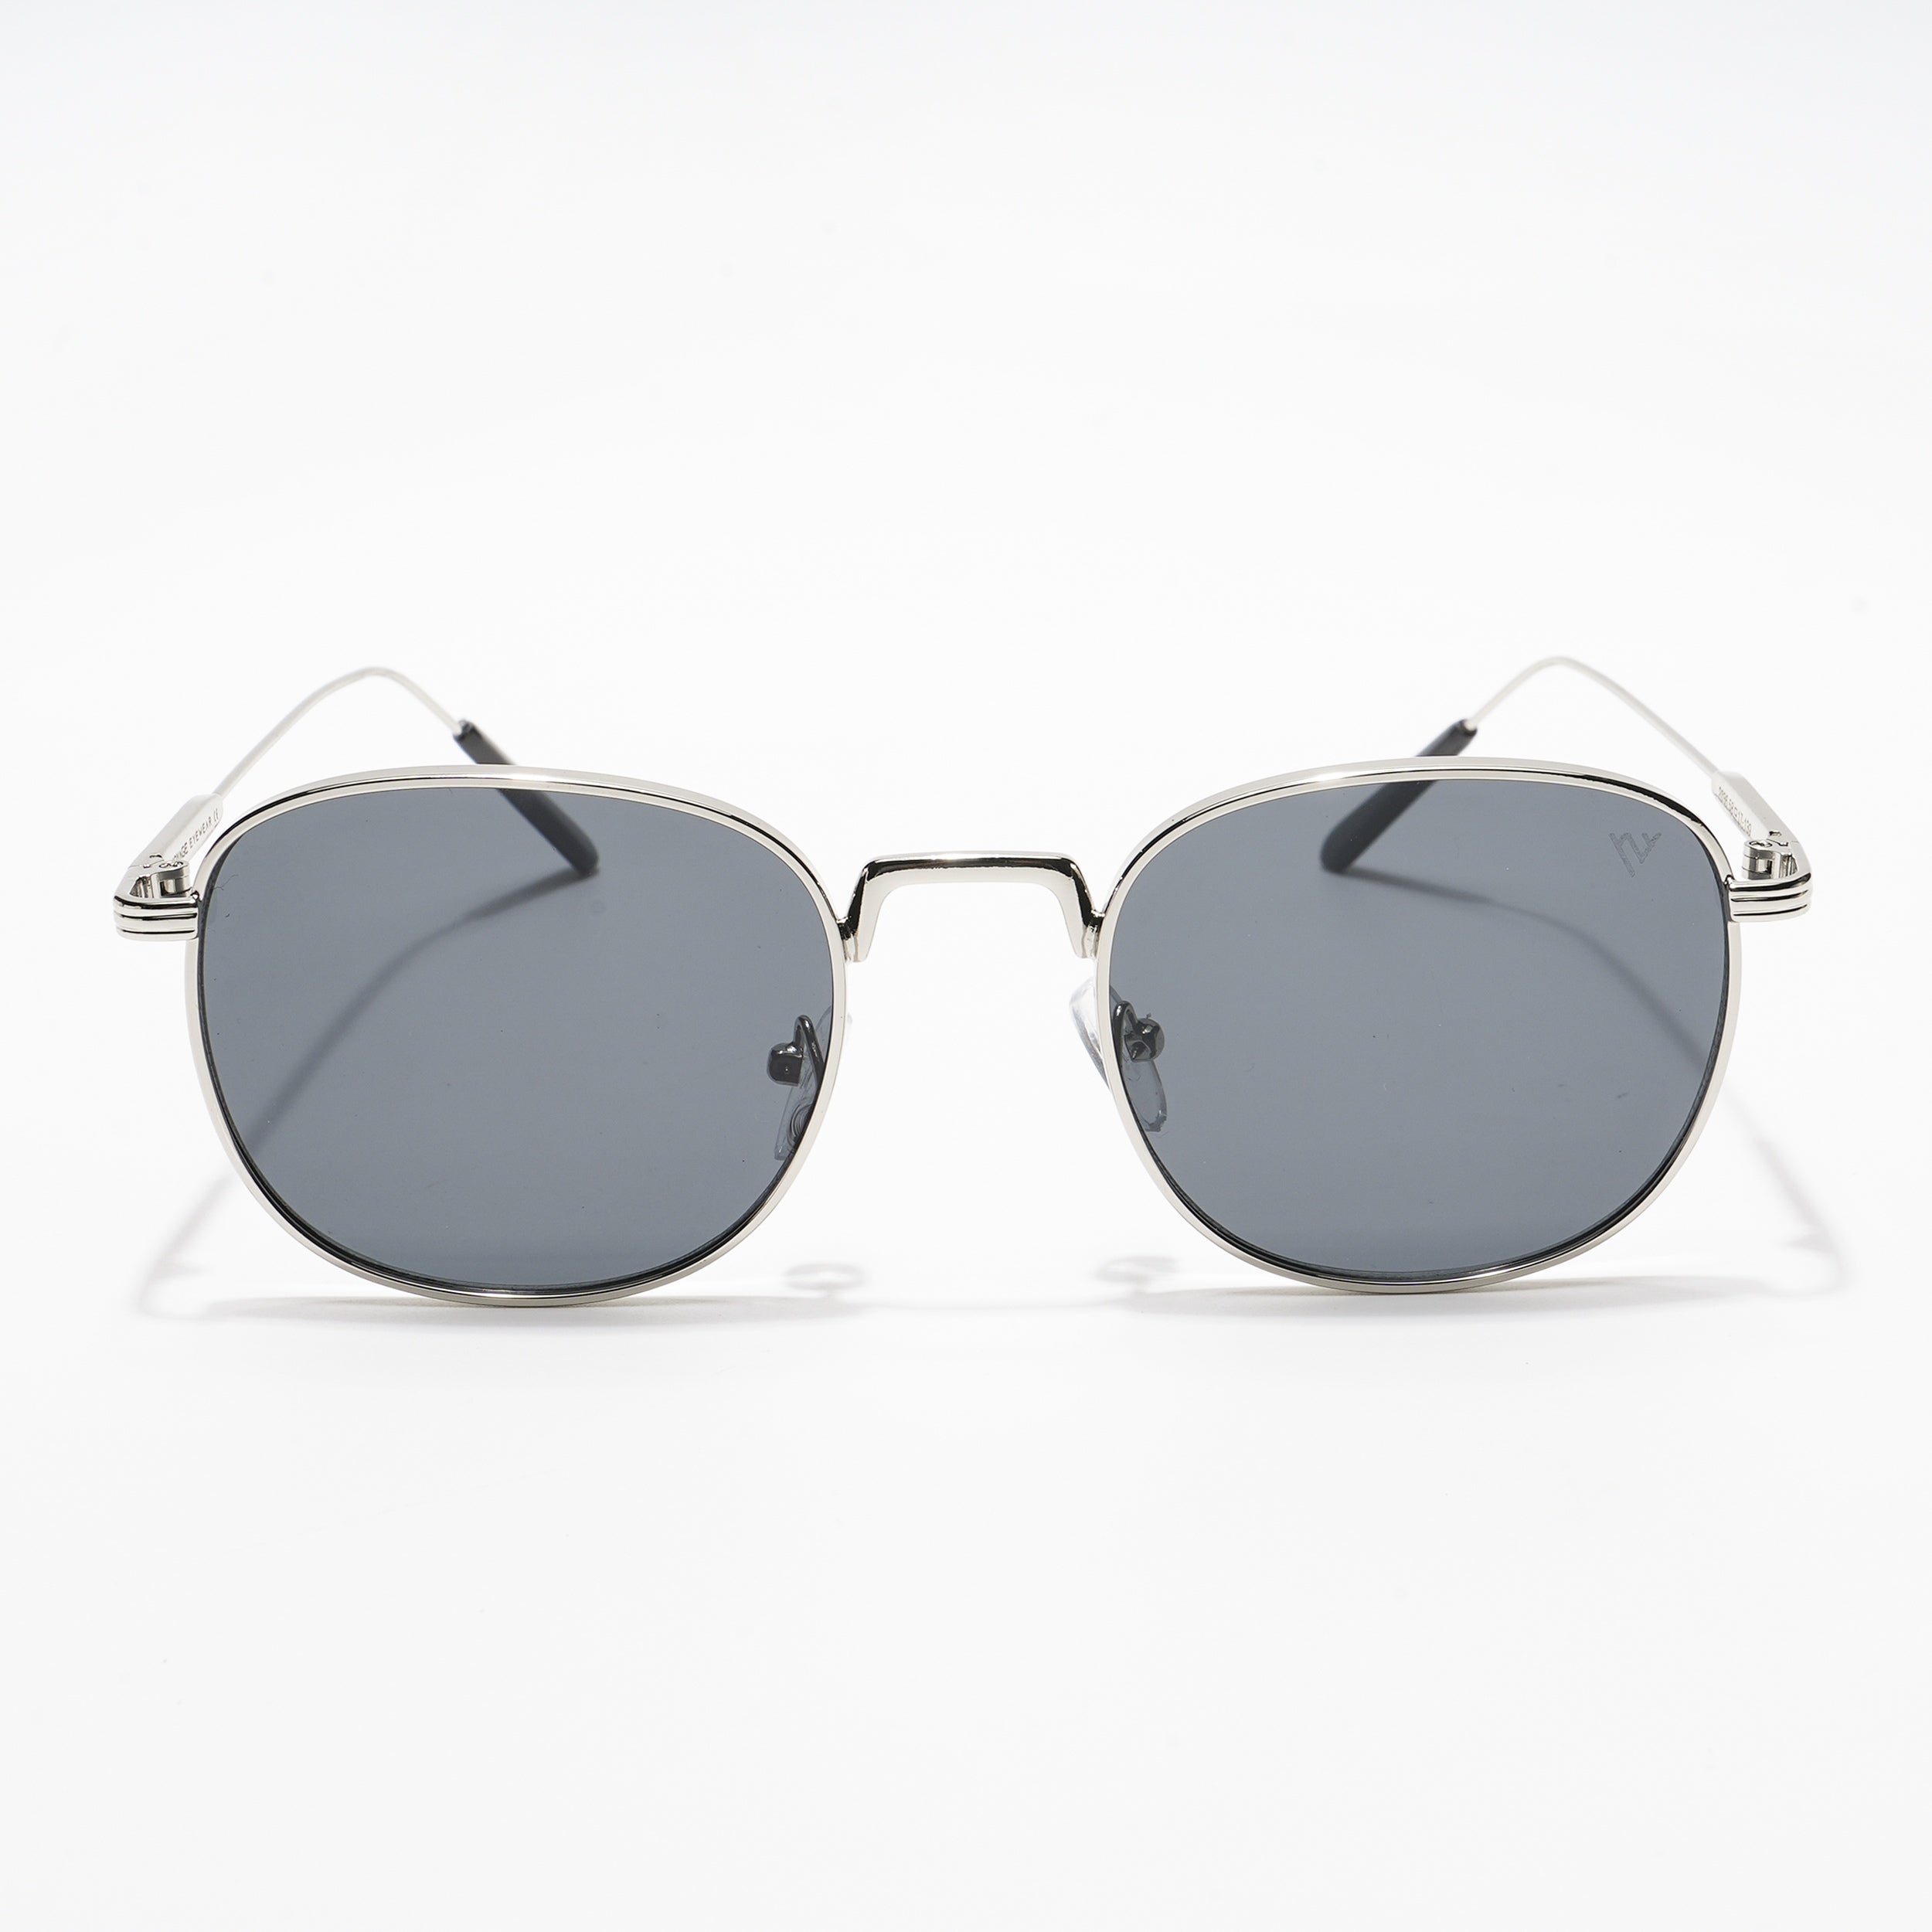 Voyage Round Black Silver Sunglasses MG2977